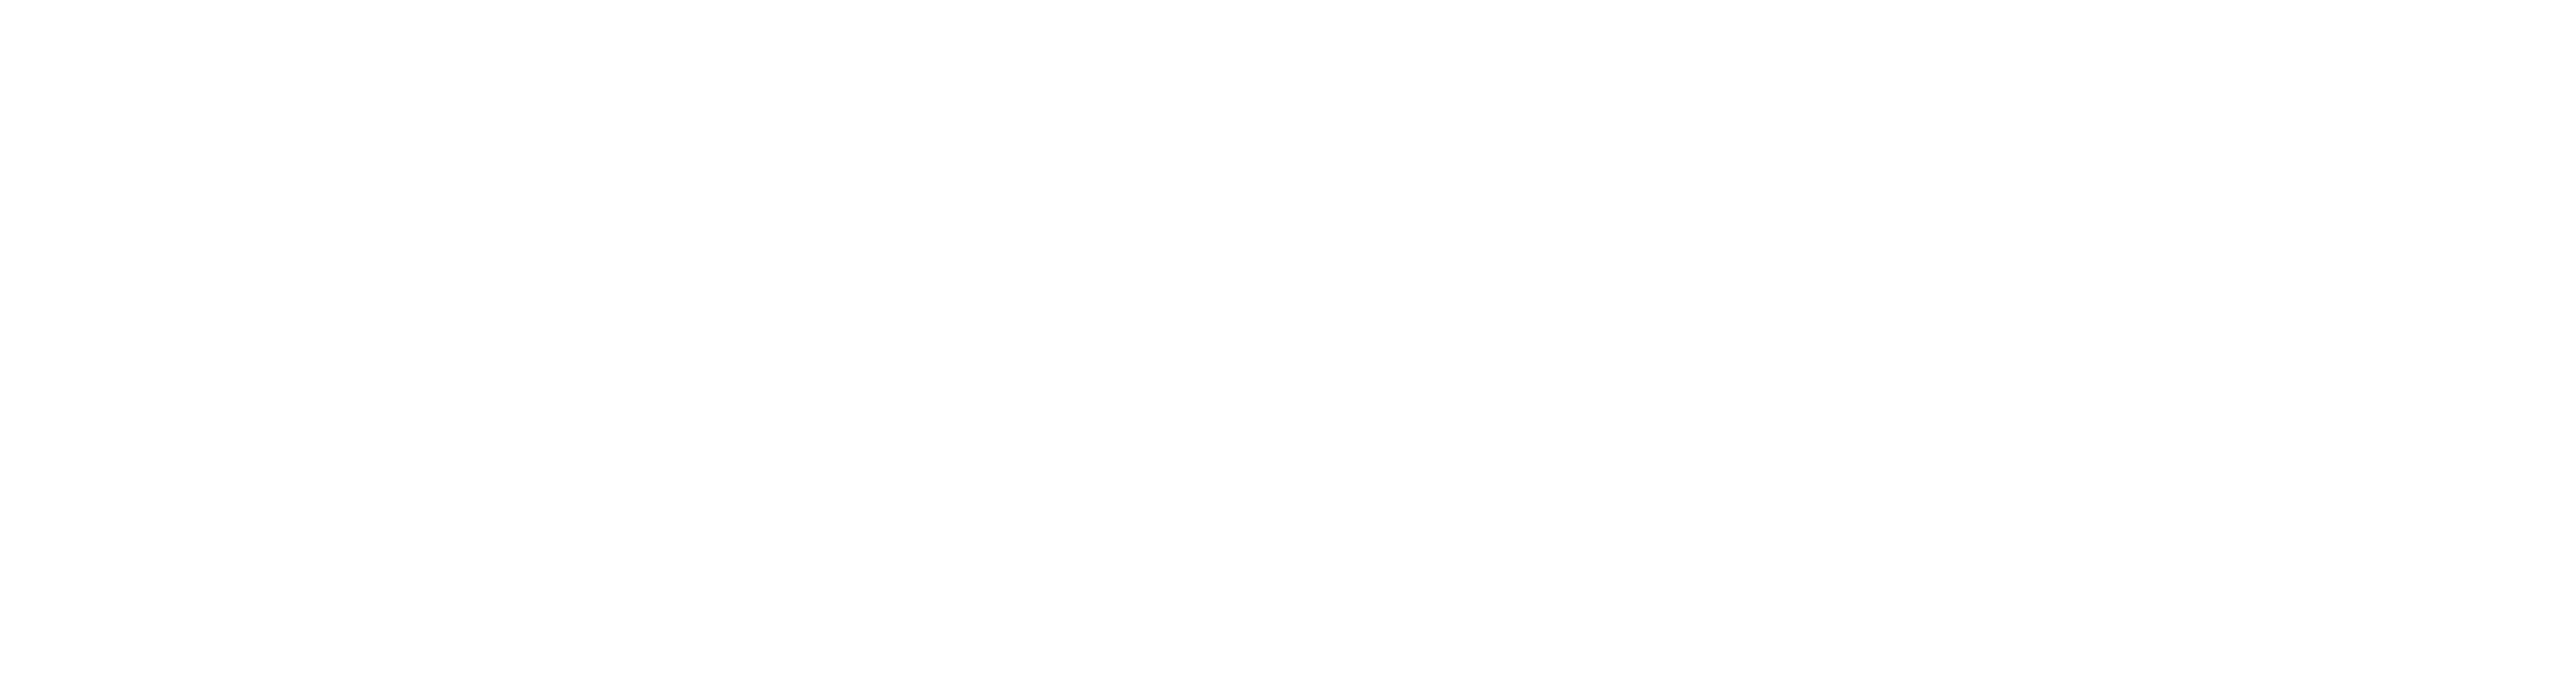 seo intense partner image logo